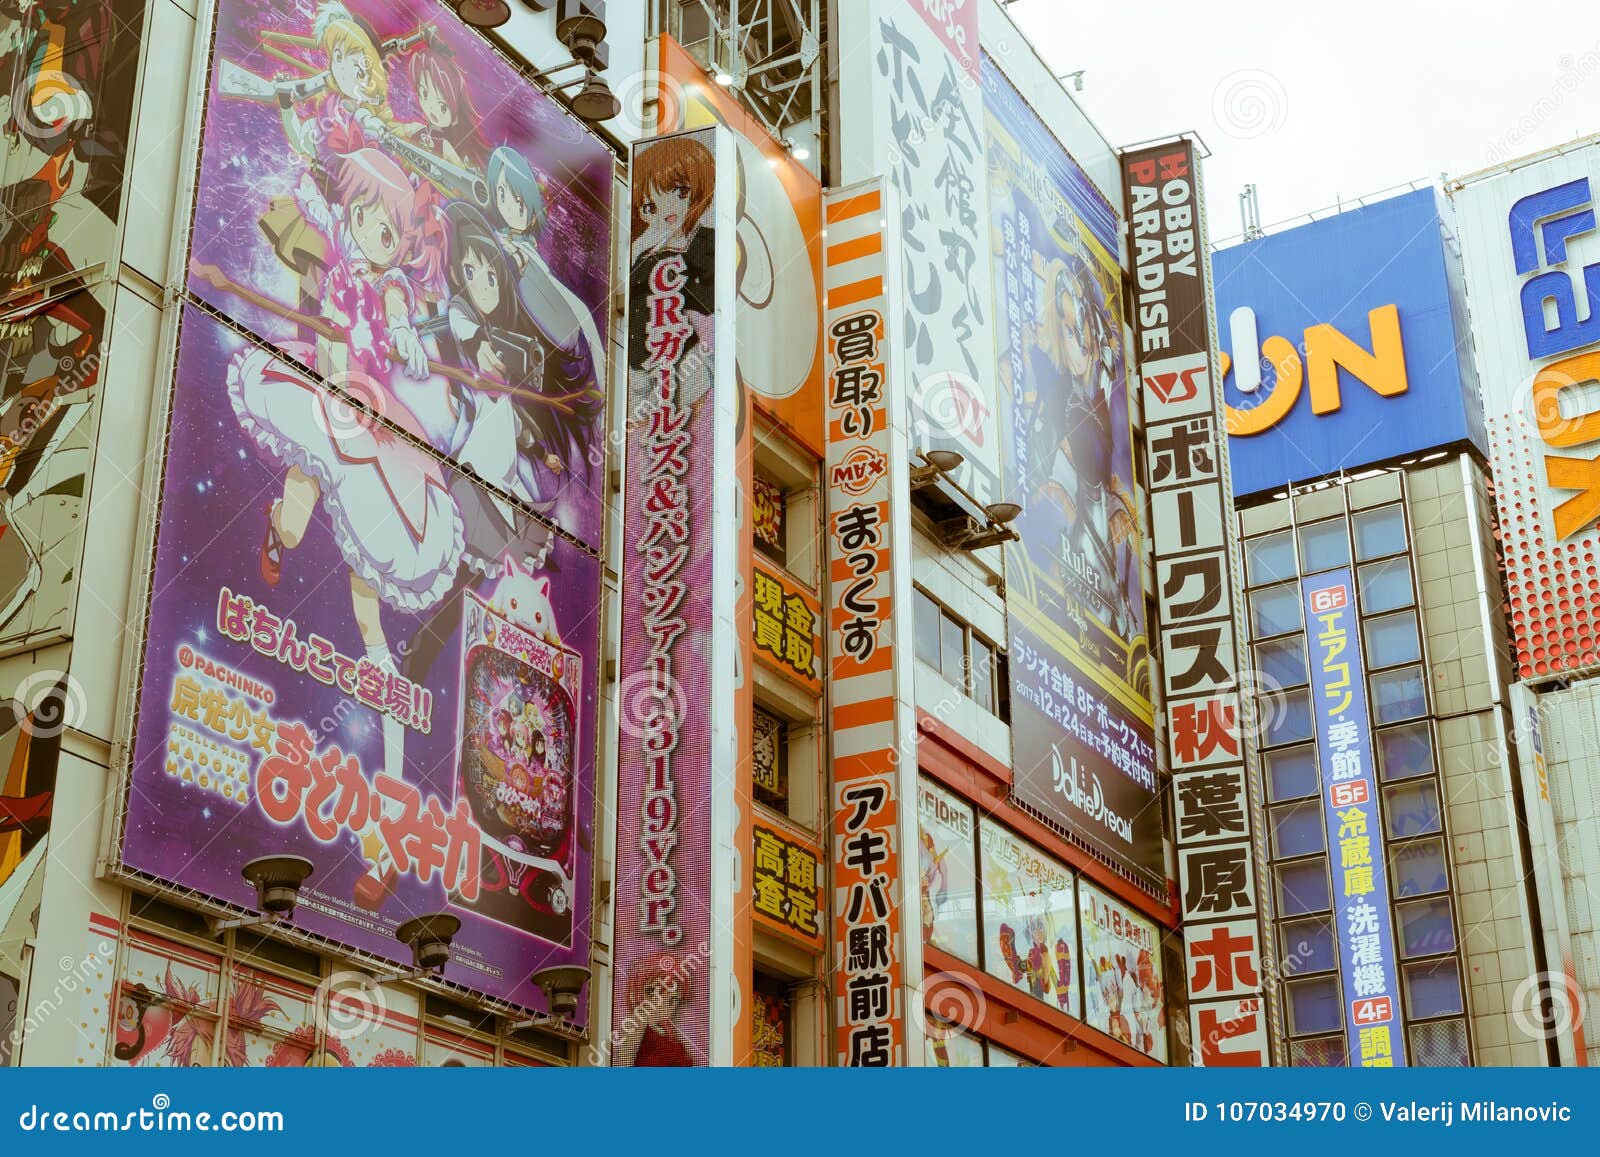 70 Sega Store At Akihabara District In Tokyo Japan Stock Photos Pictures   RoyaltyFree Images  iStock